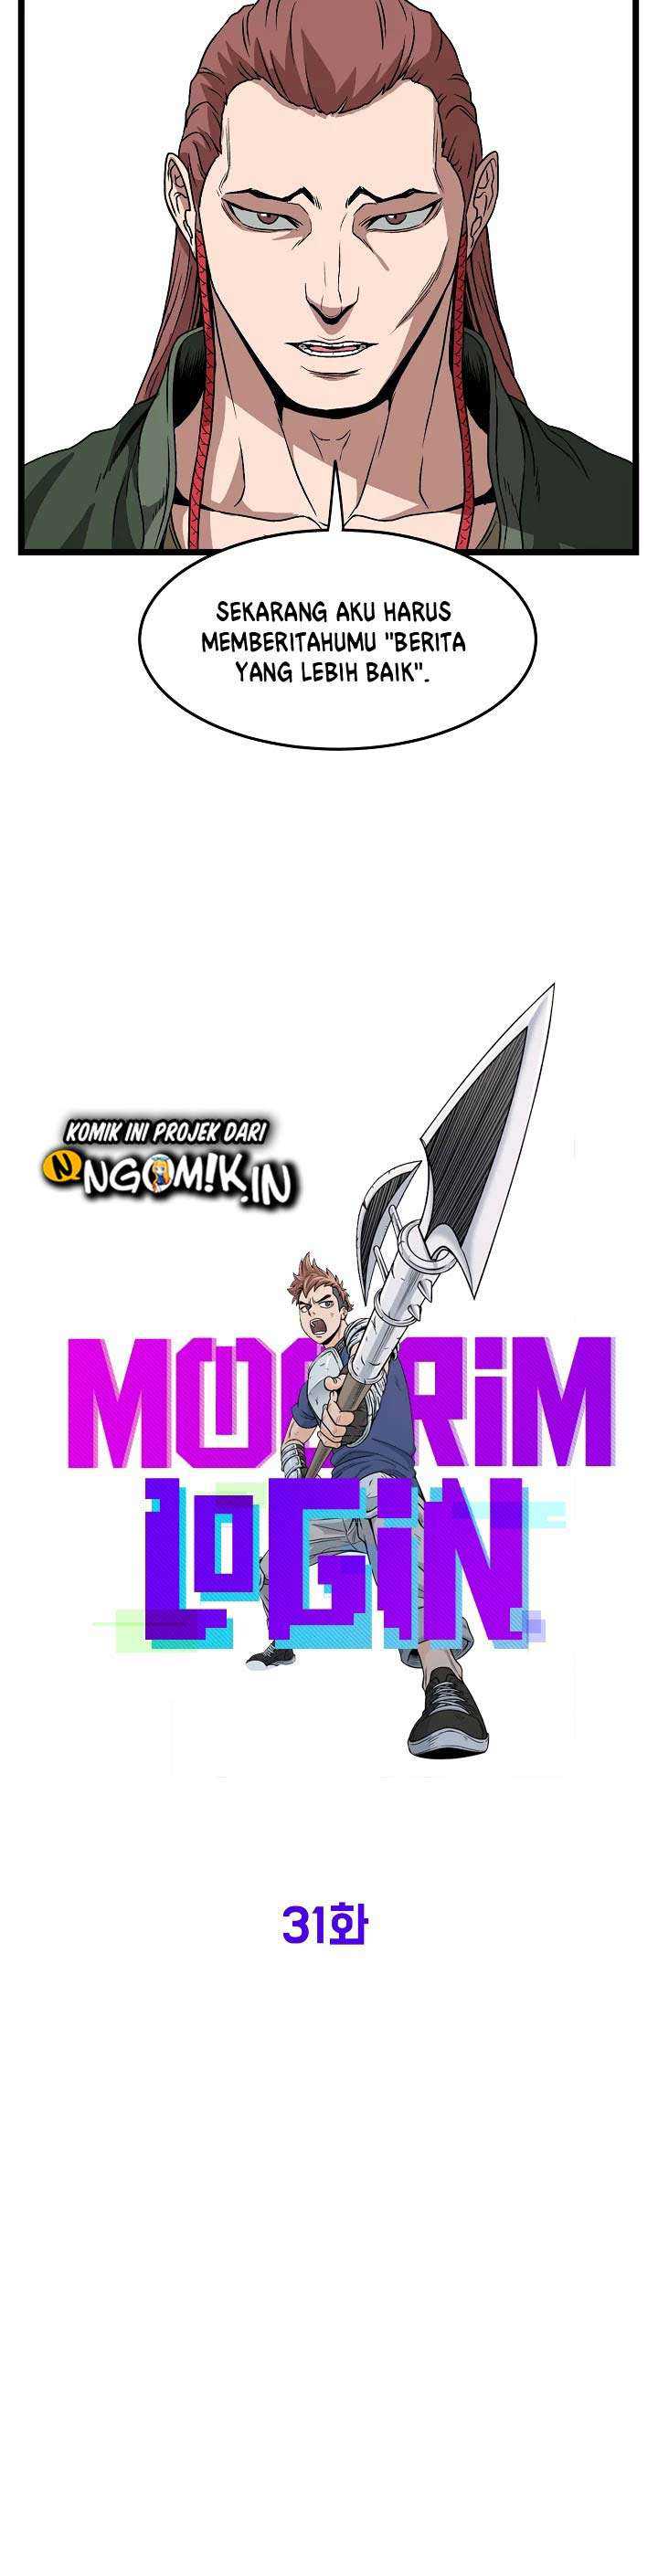 murim-login Chapter chapter-31